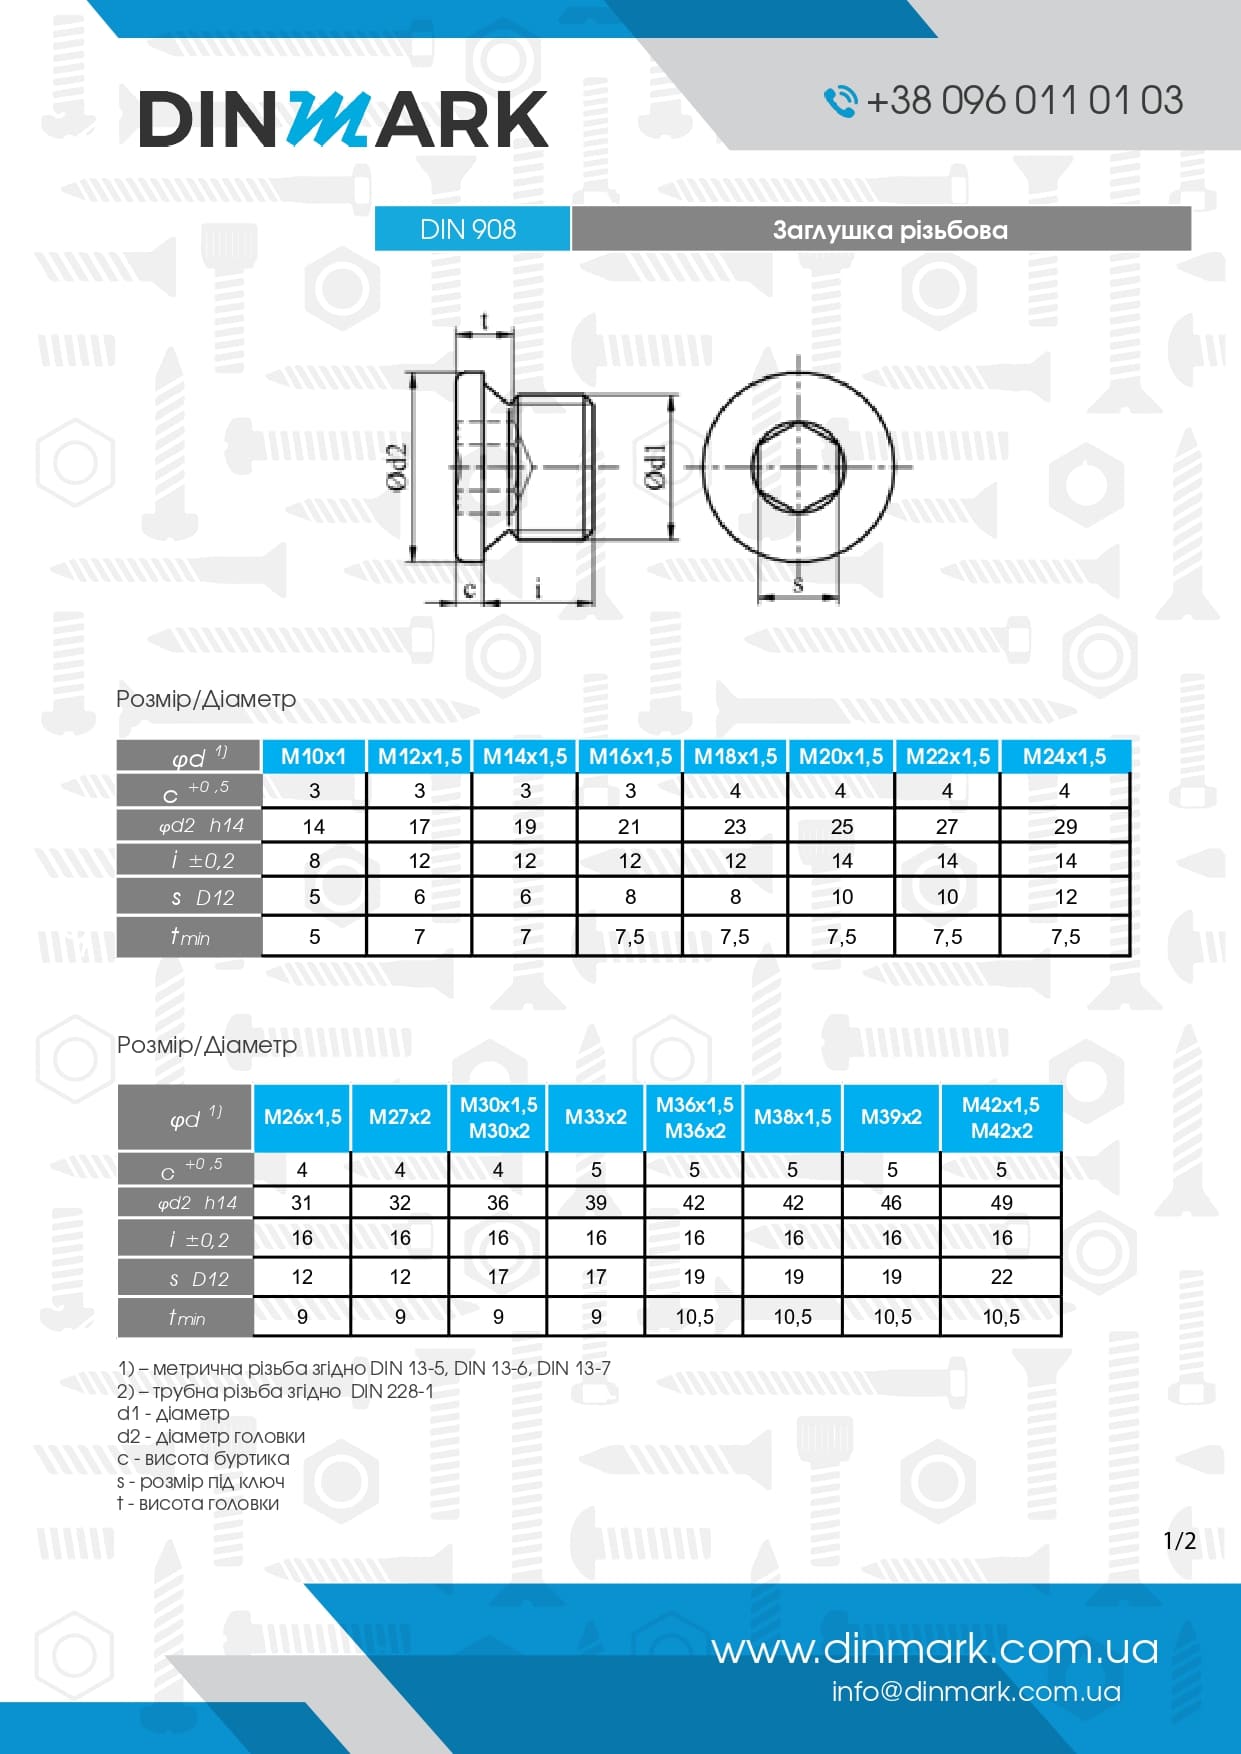 DIN 908 zinc plated threaded cylindrivcal Cap with inch thread pdf